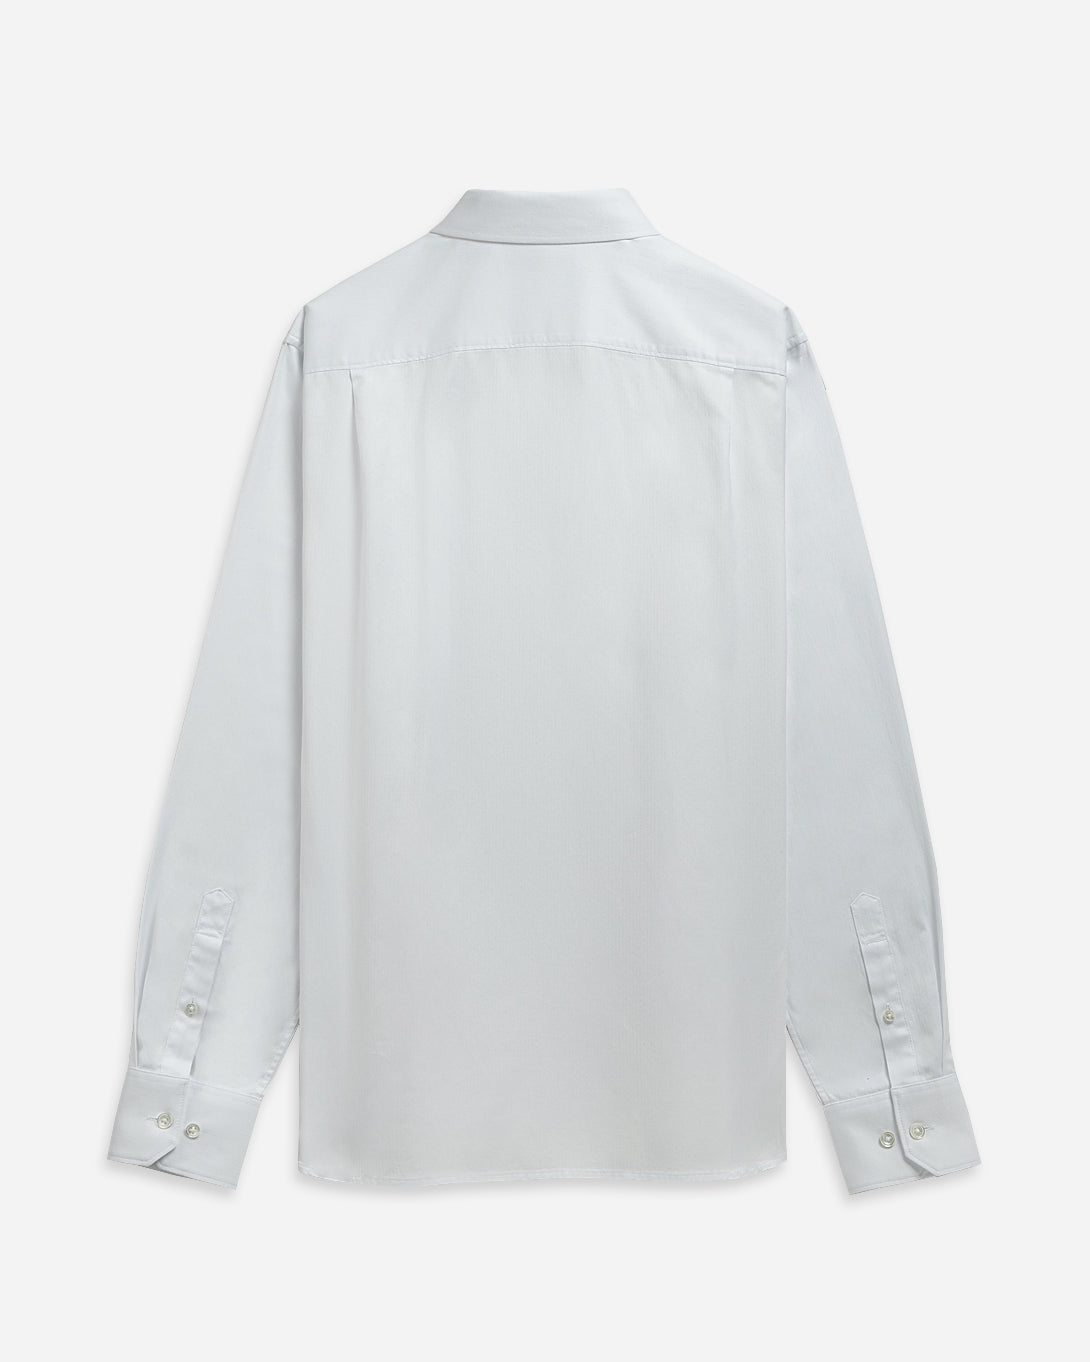 BRIGHT WHITE Adrian Herringbone Shirt Button Up Point Collar